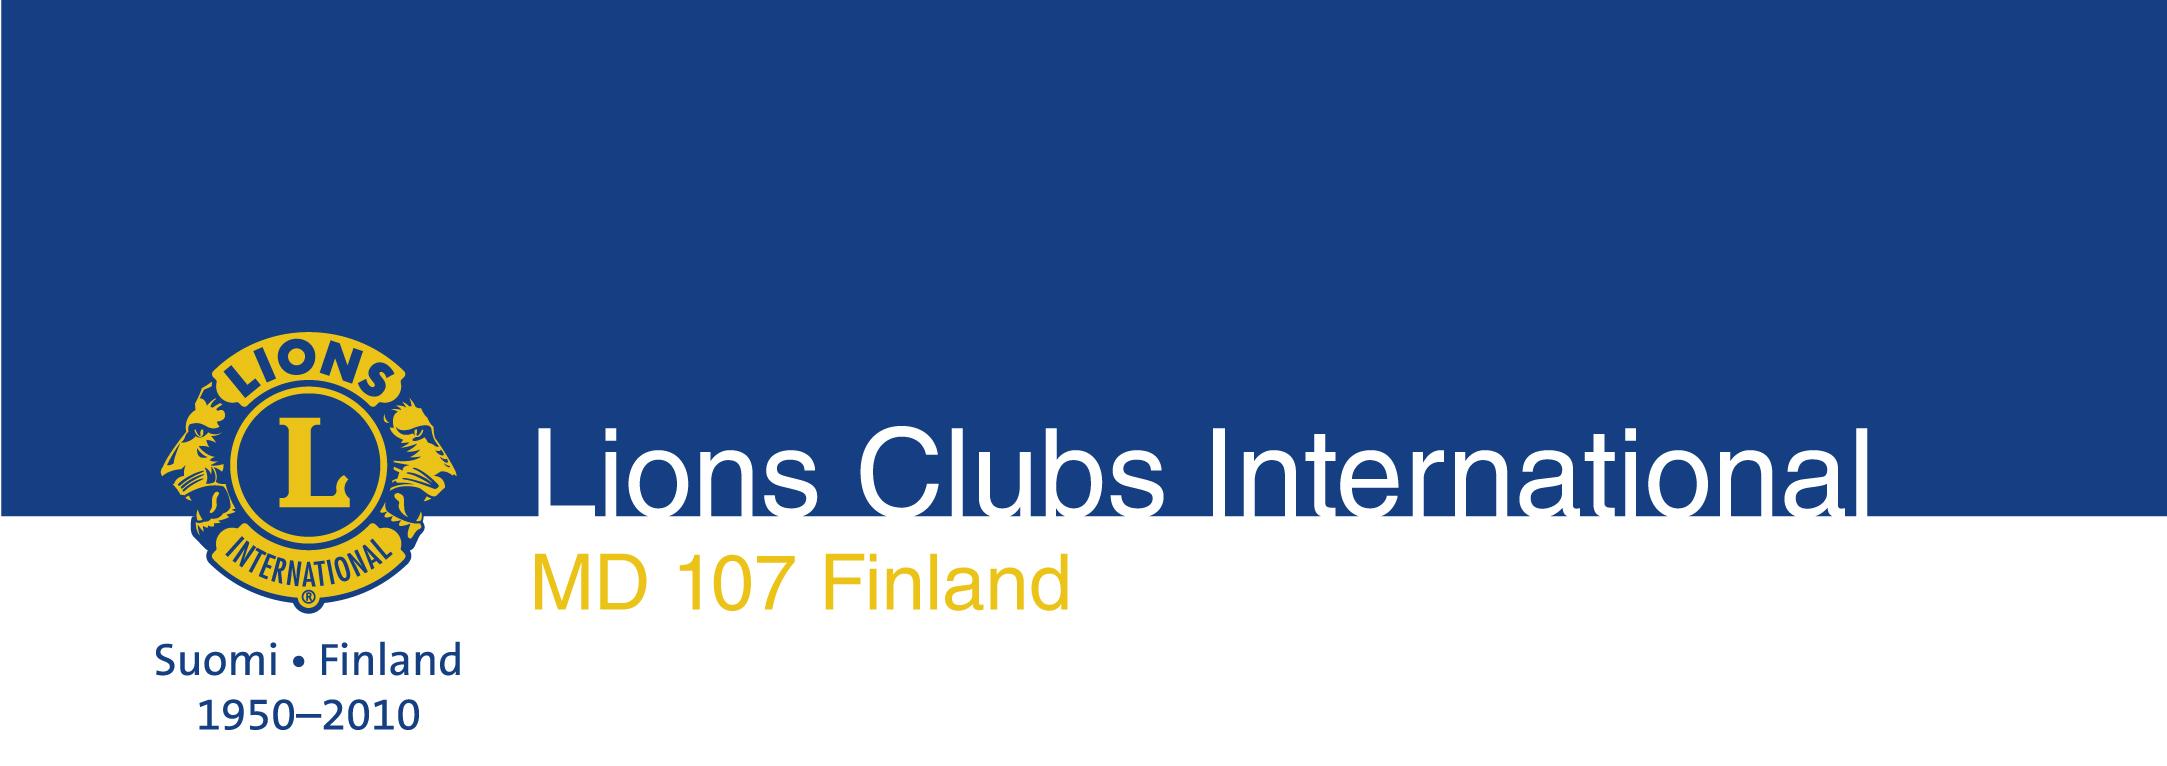 Lions Clubs International MD 107 Finland Lions tietoa uusille jäsenille Lions